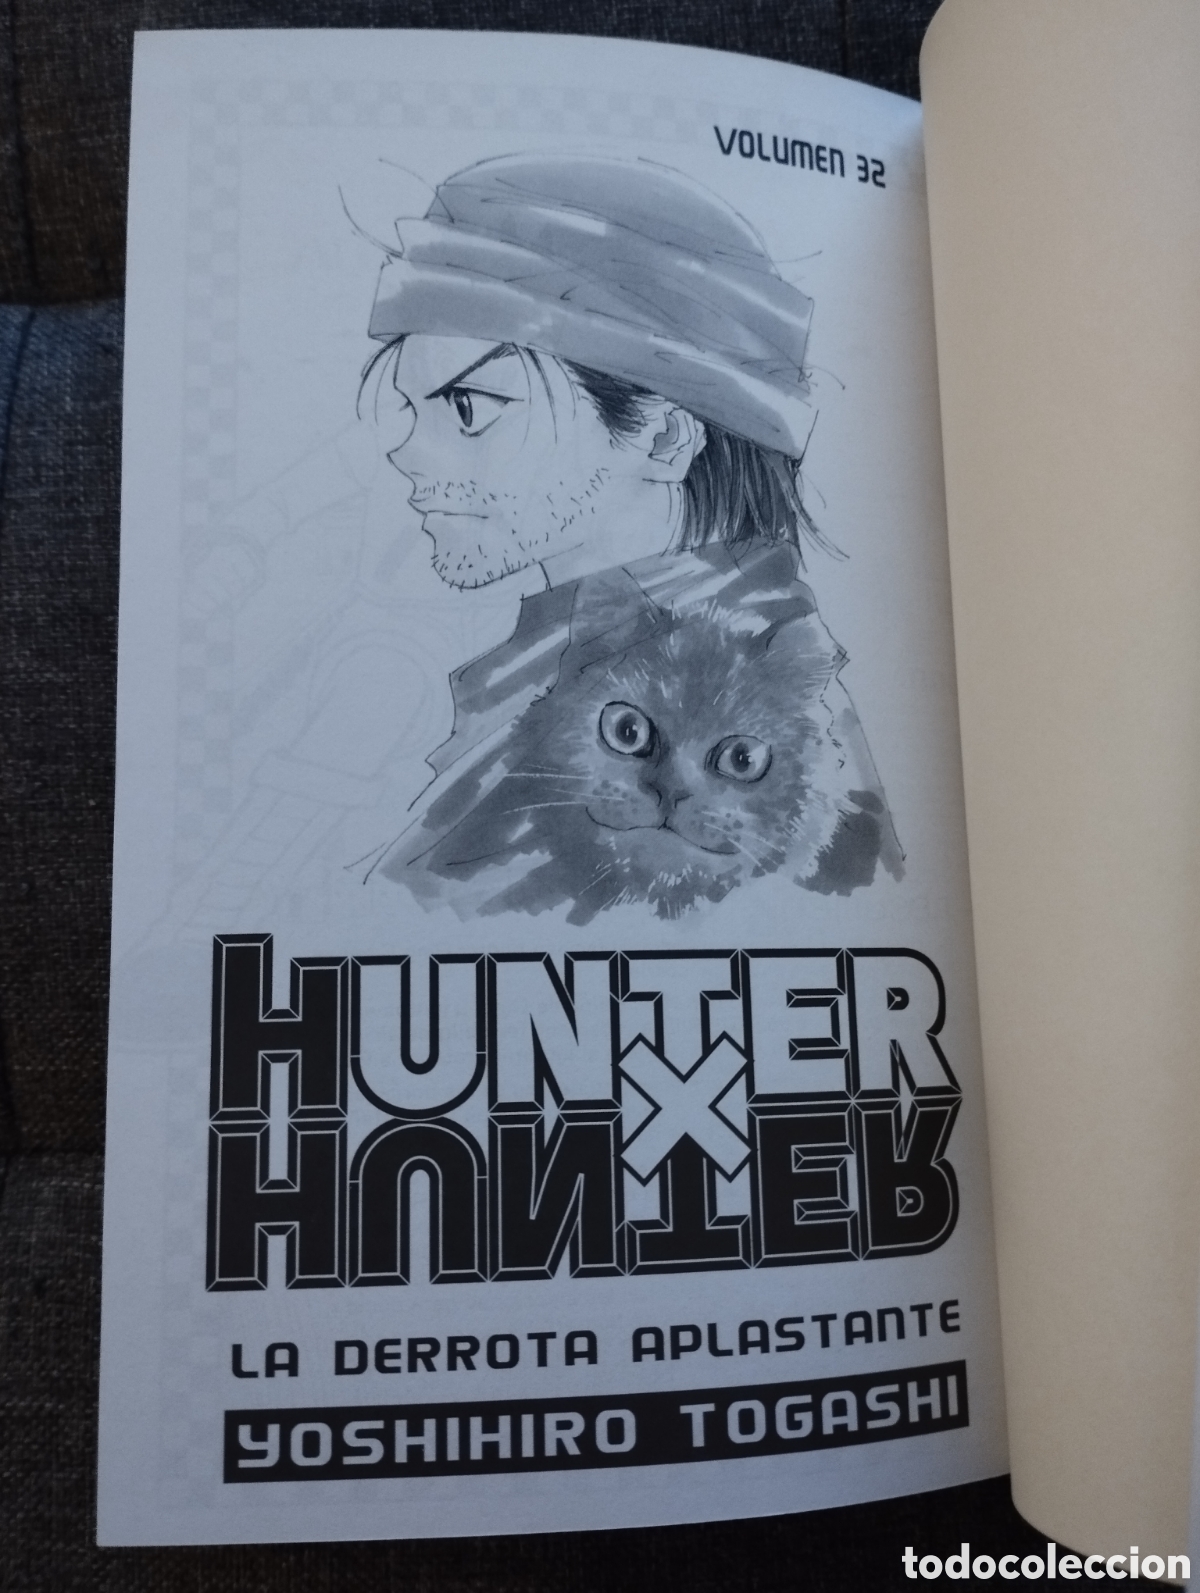 Hunter x Hunter, Vol. 32 (Hunter x Hunter, #32) by Yoshihiro Togashi